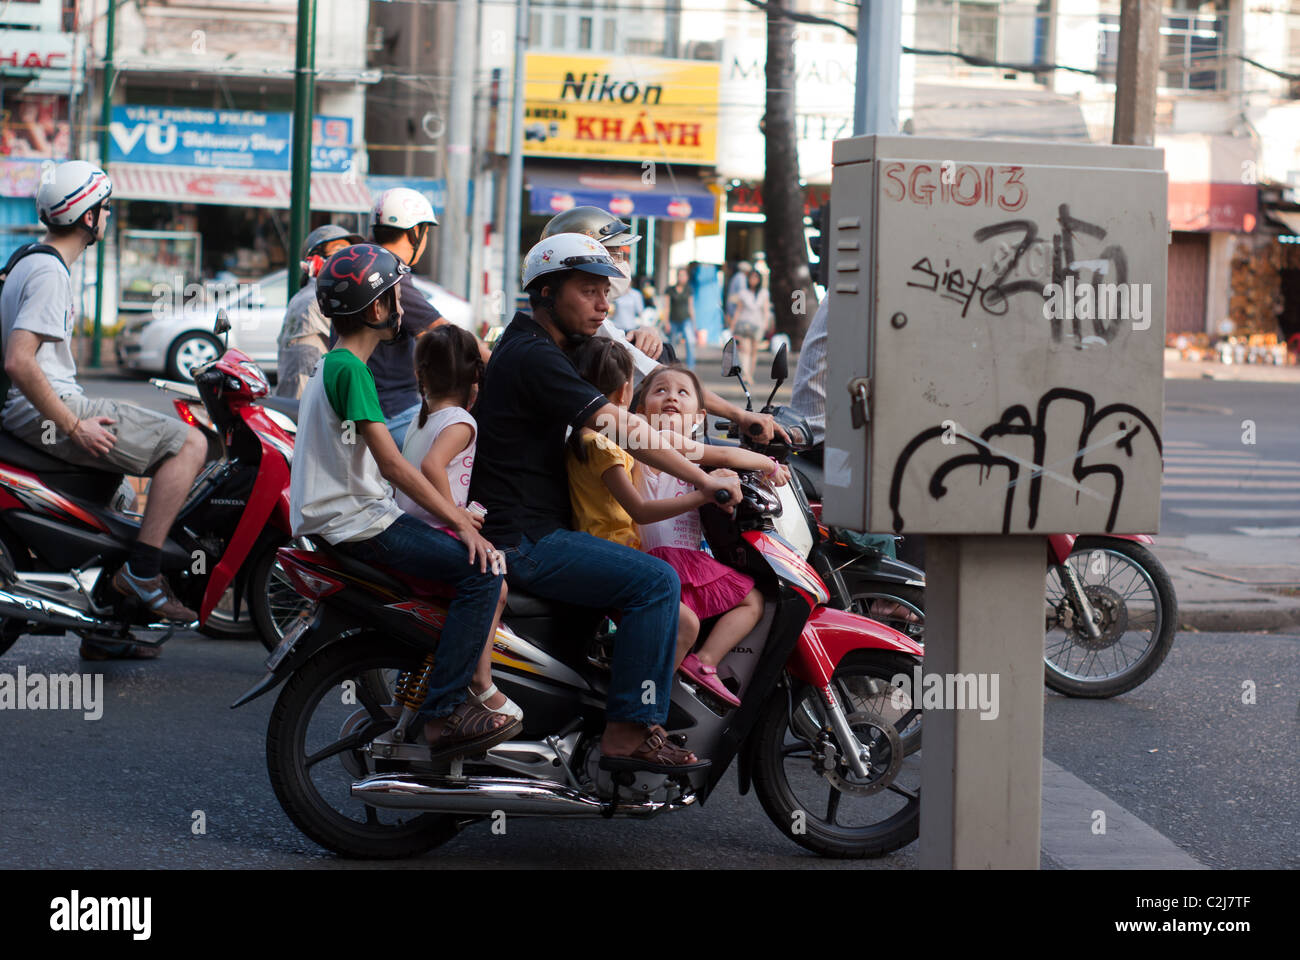 Family on motorbike in Saigon Vietnam Stock Photo